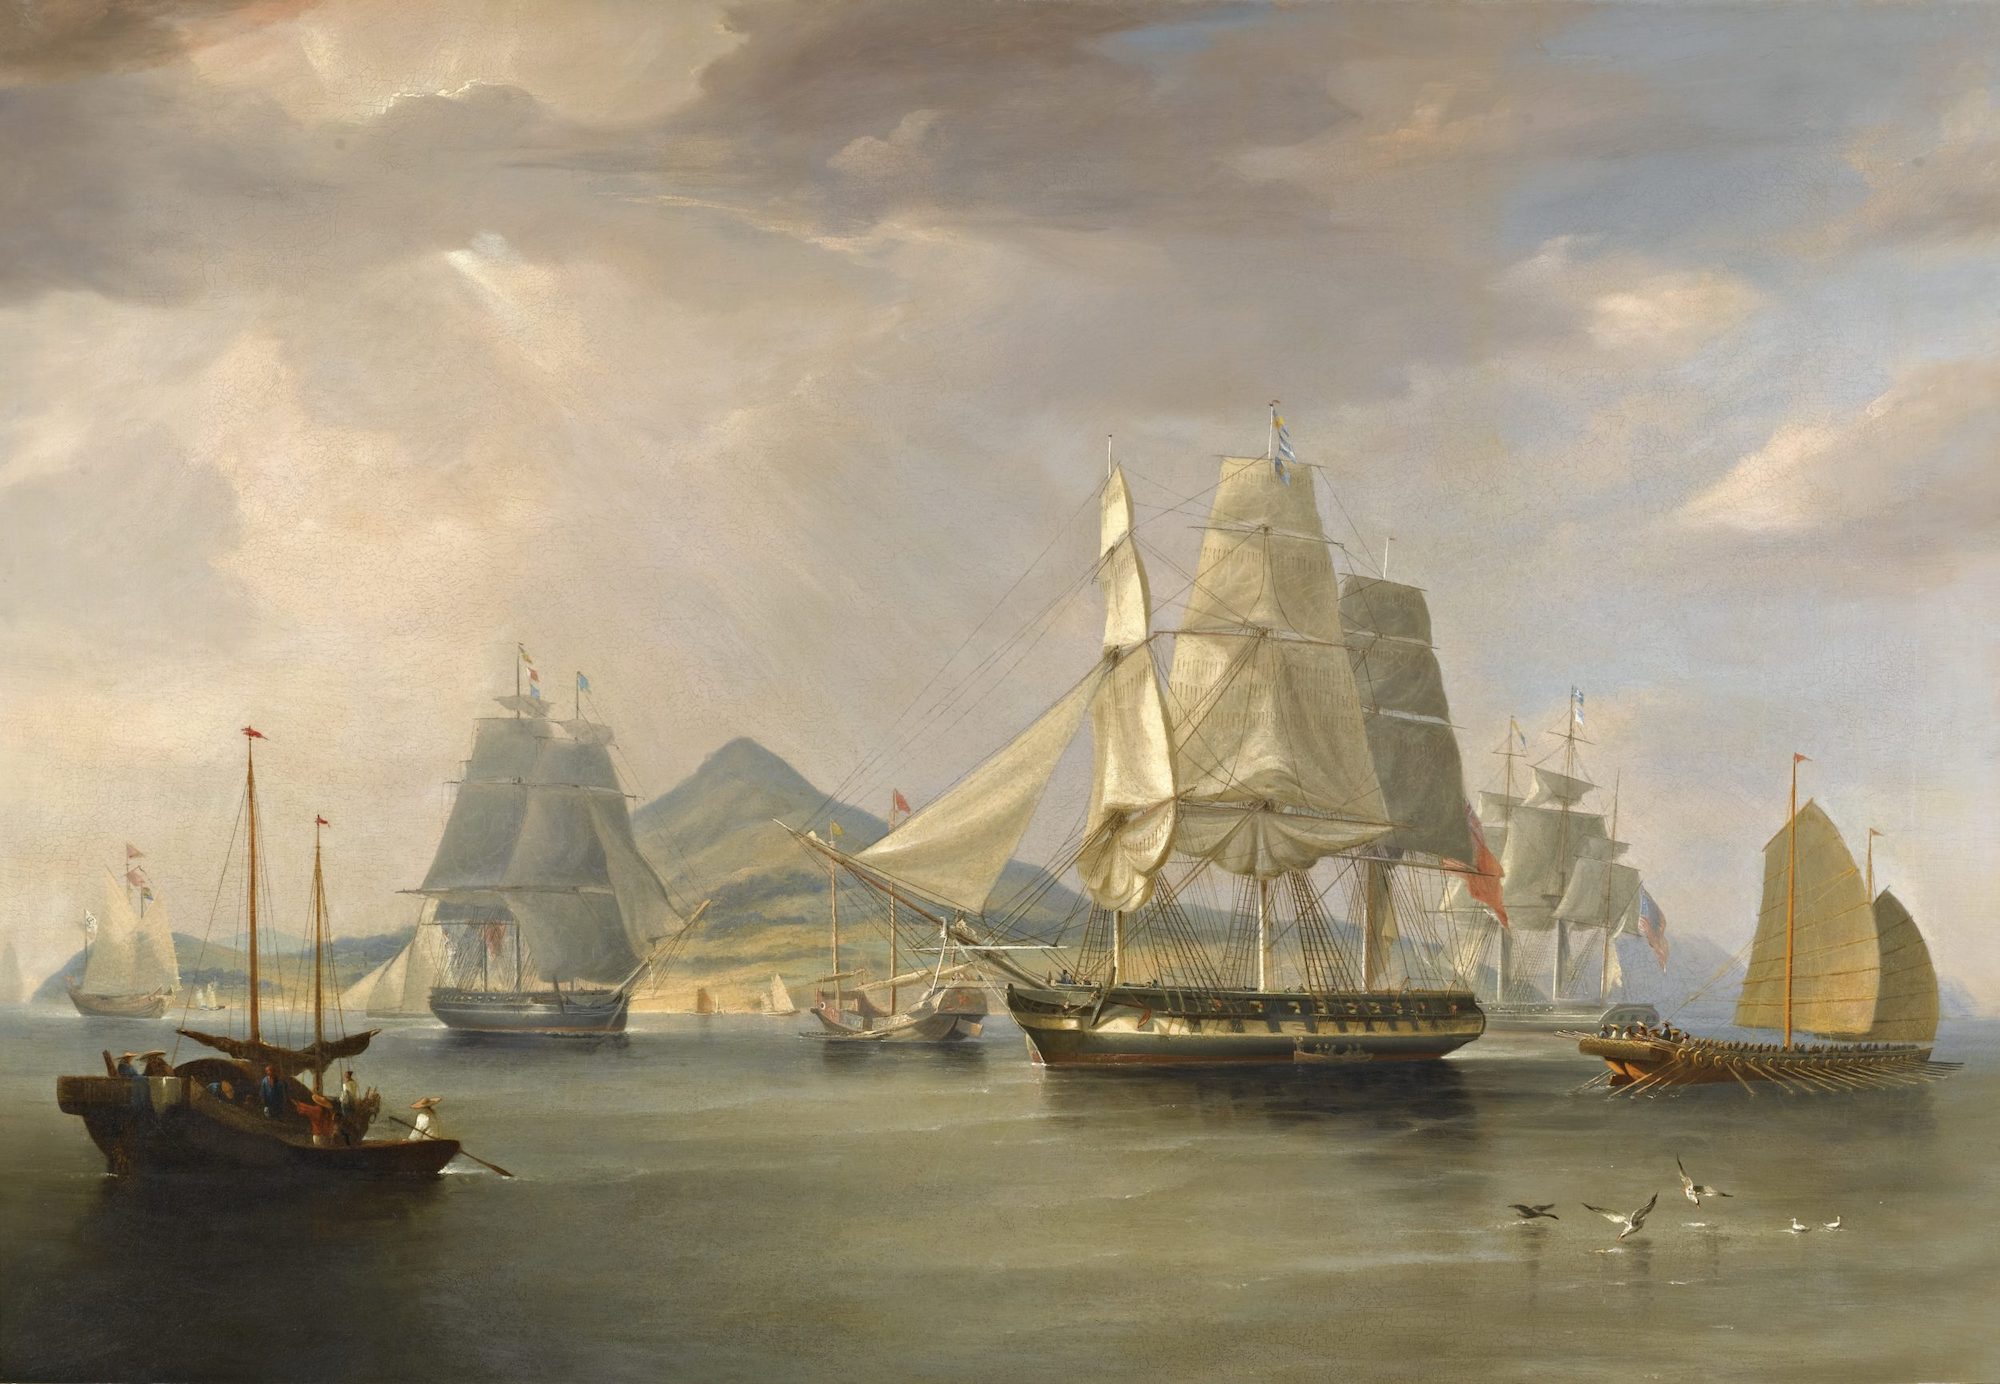 The opium ships at Lintin, China,1824 by William John Huggins